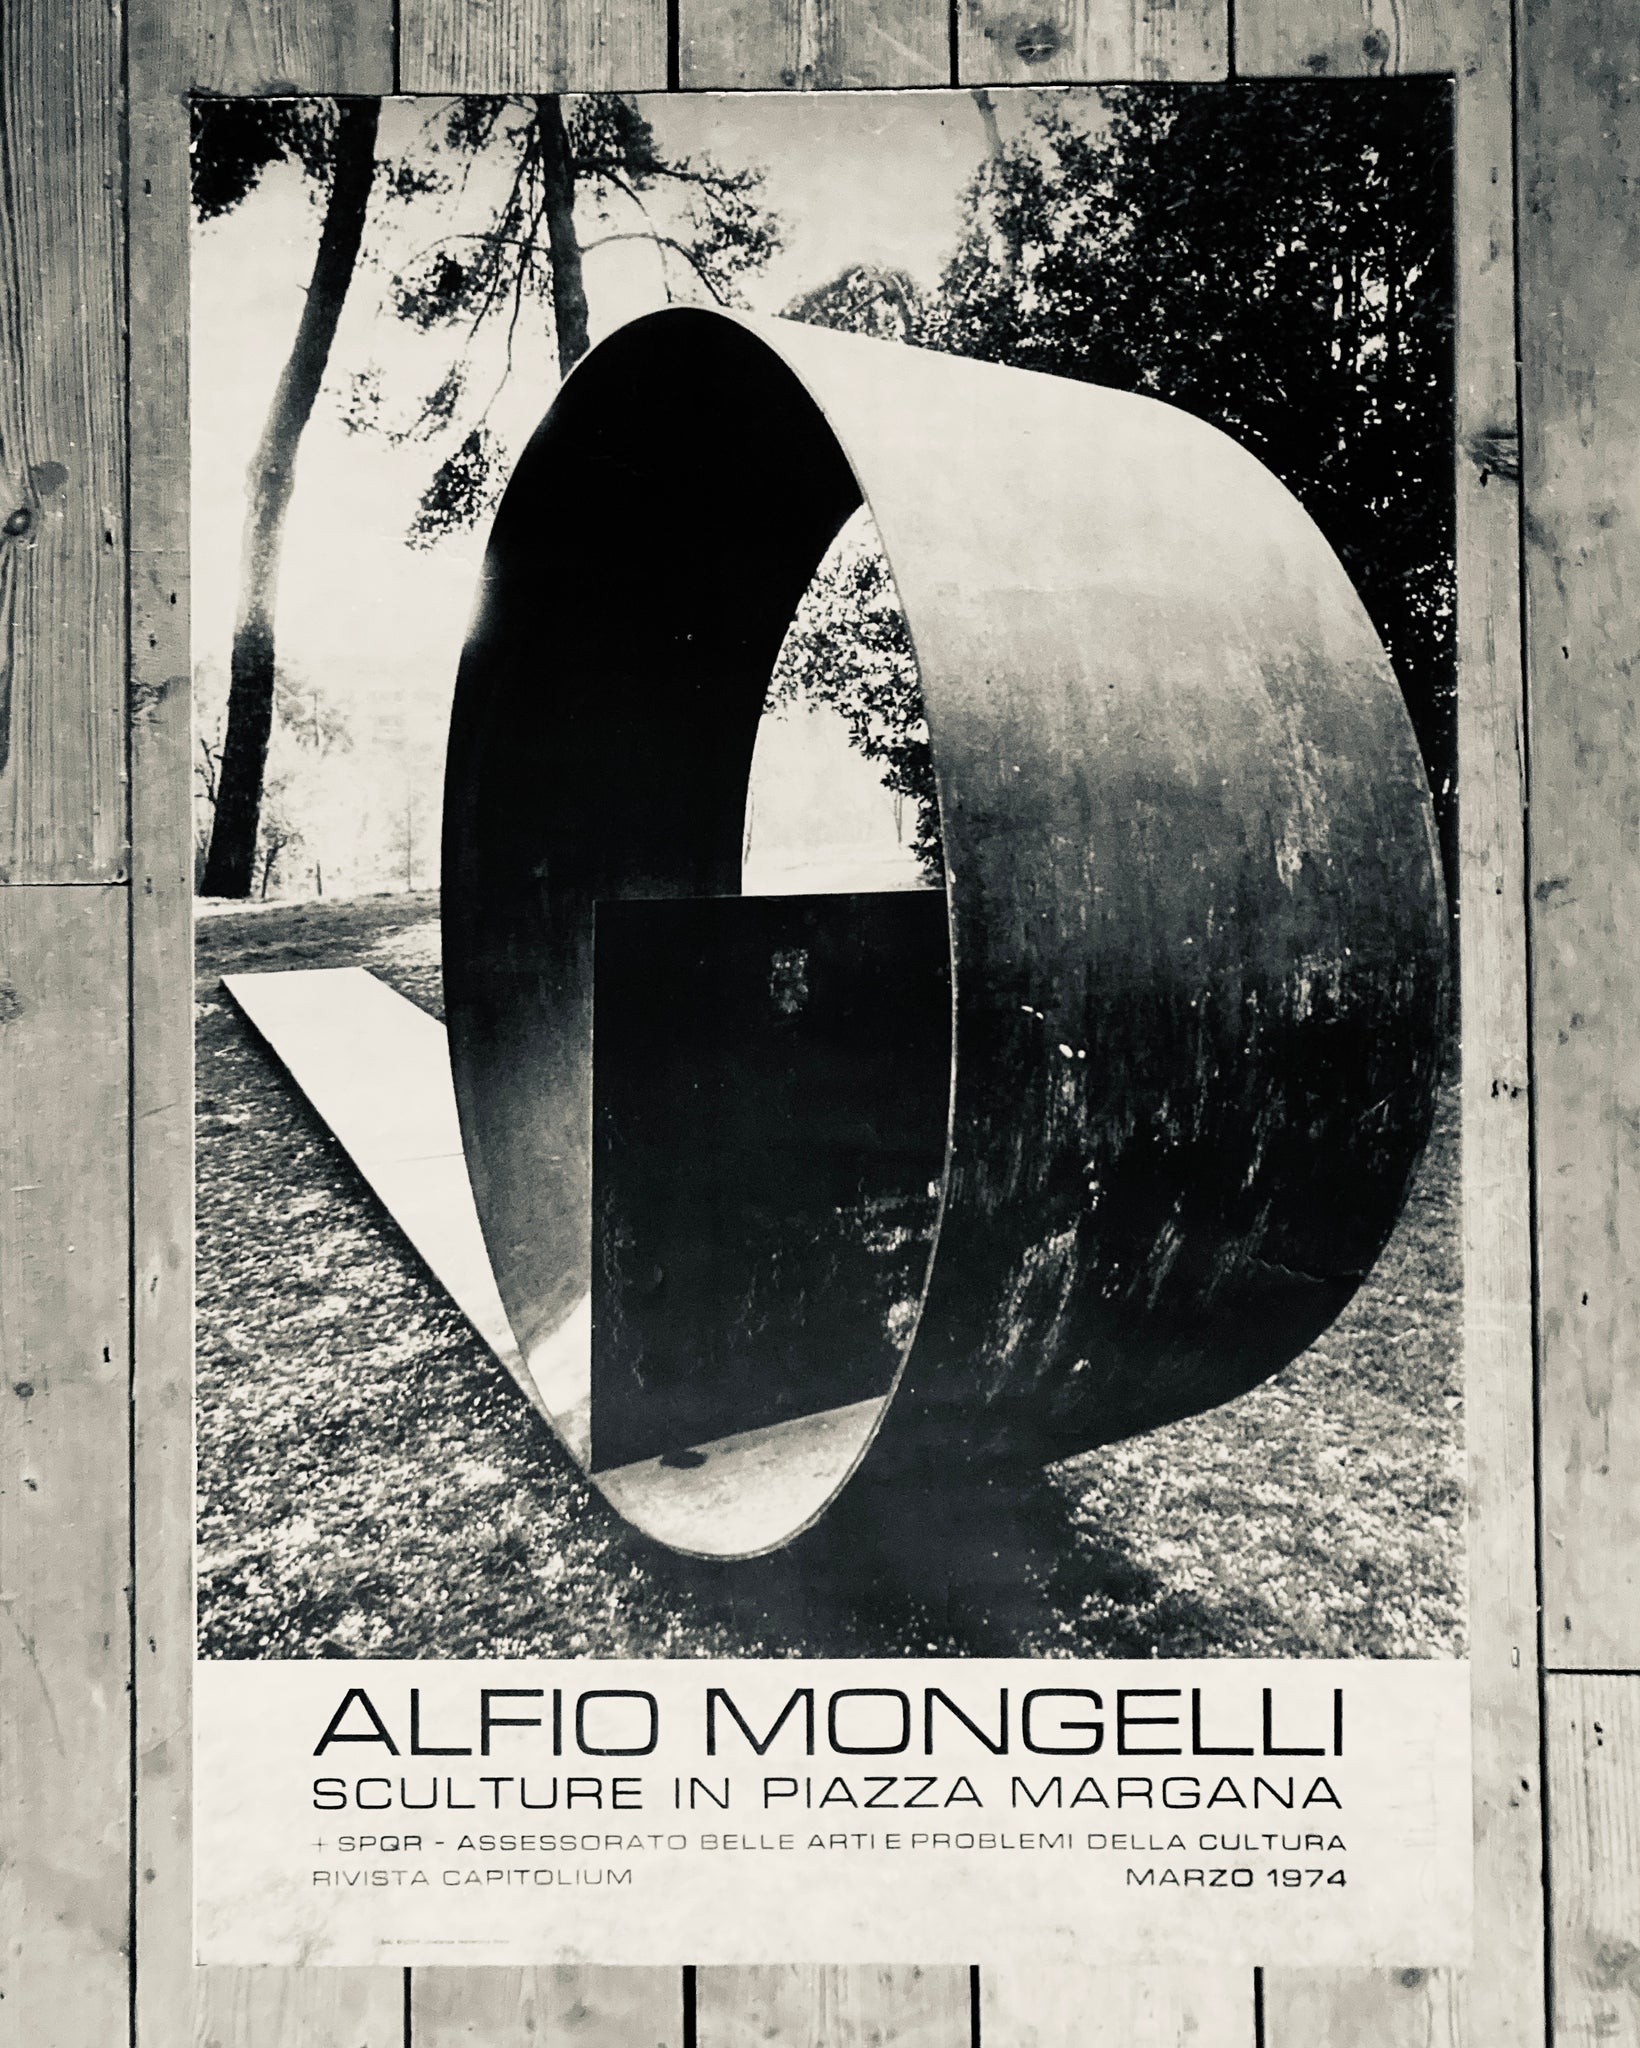 Original Alfio Mongelli 1974 Exibition Poster